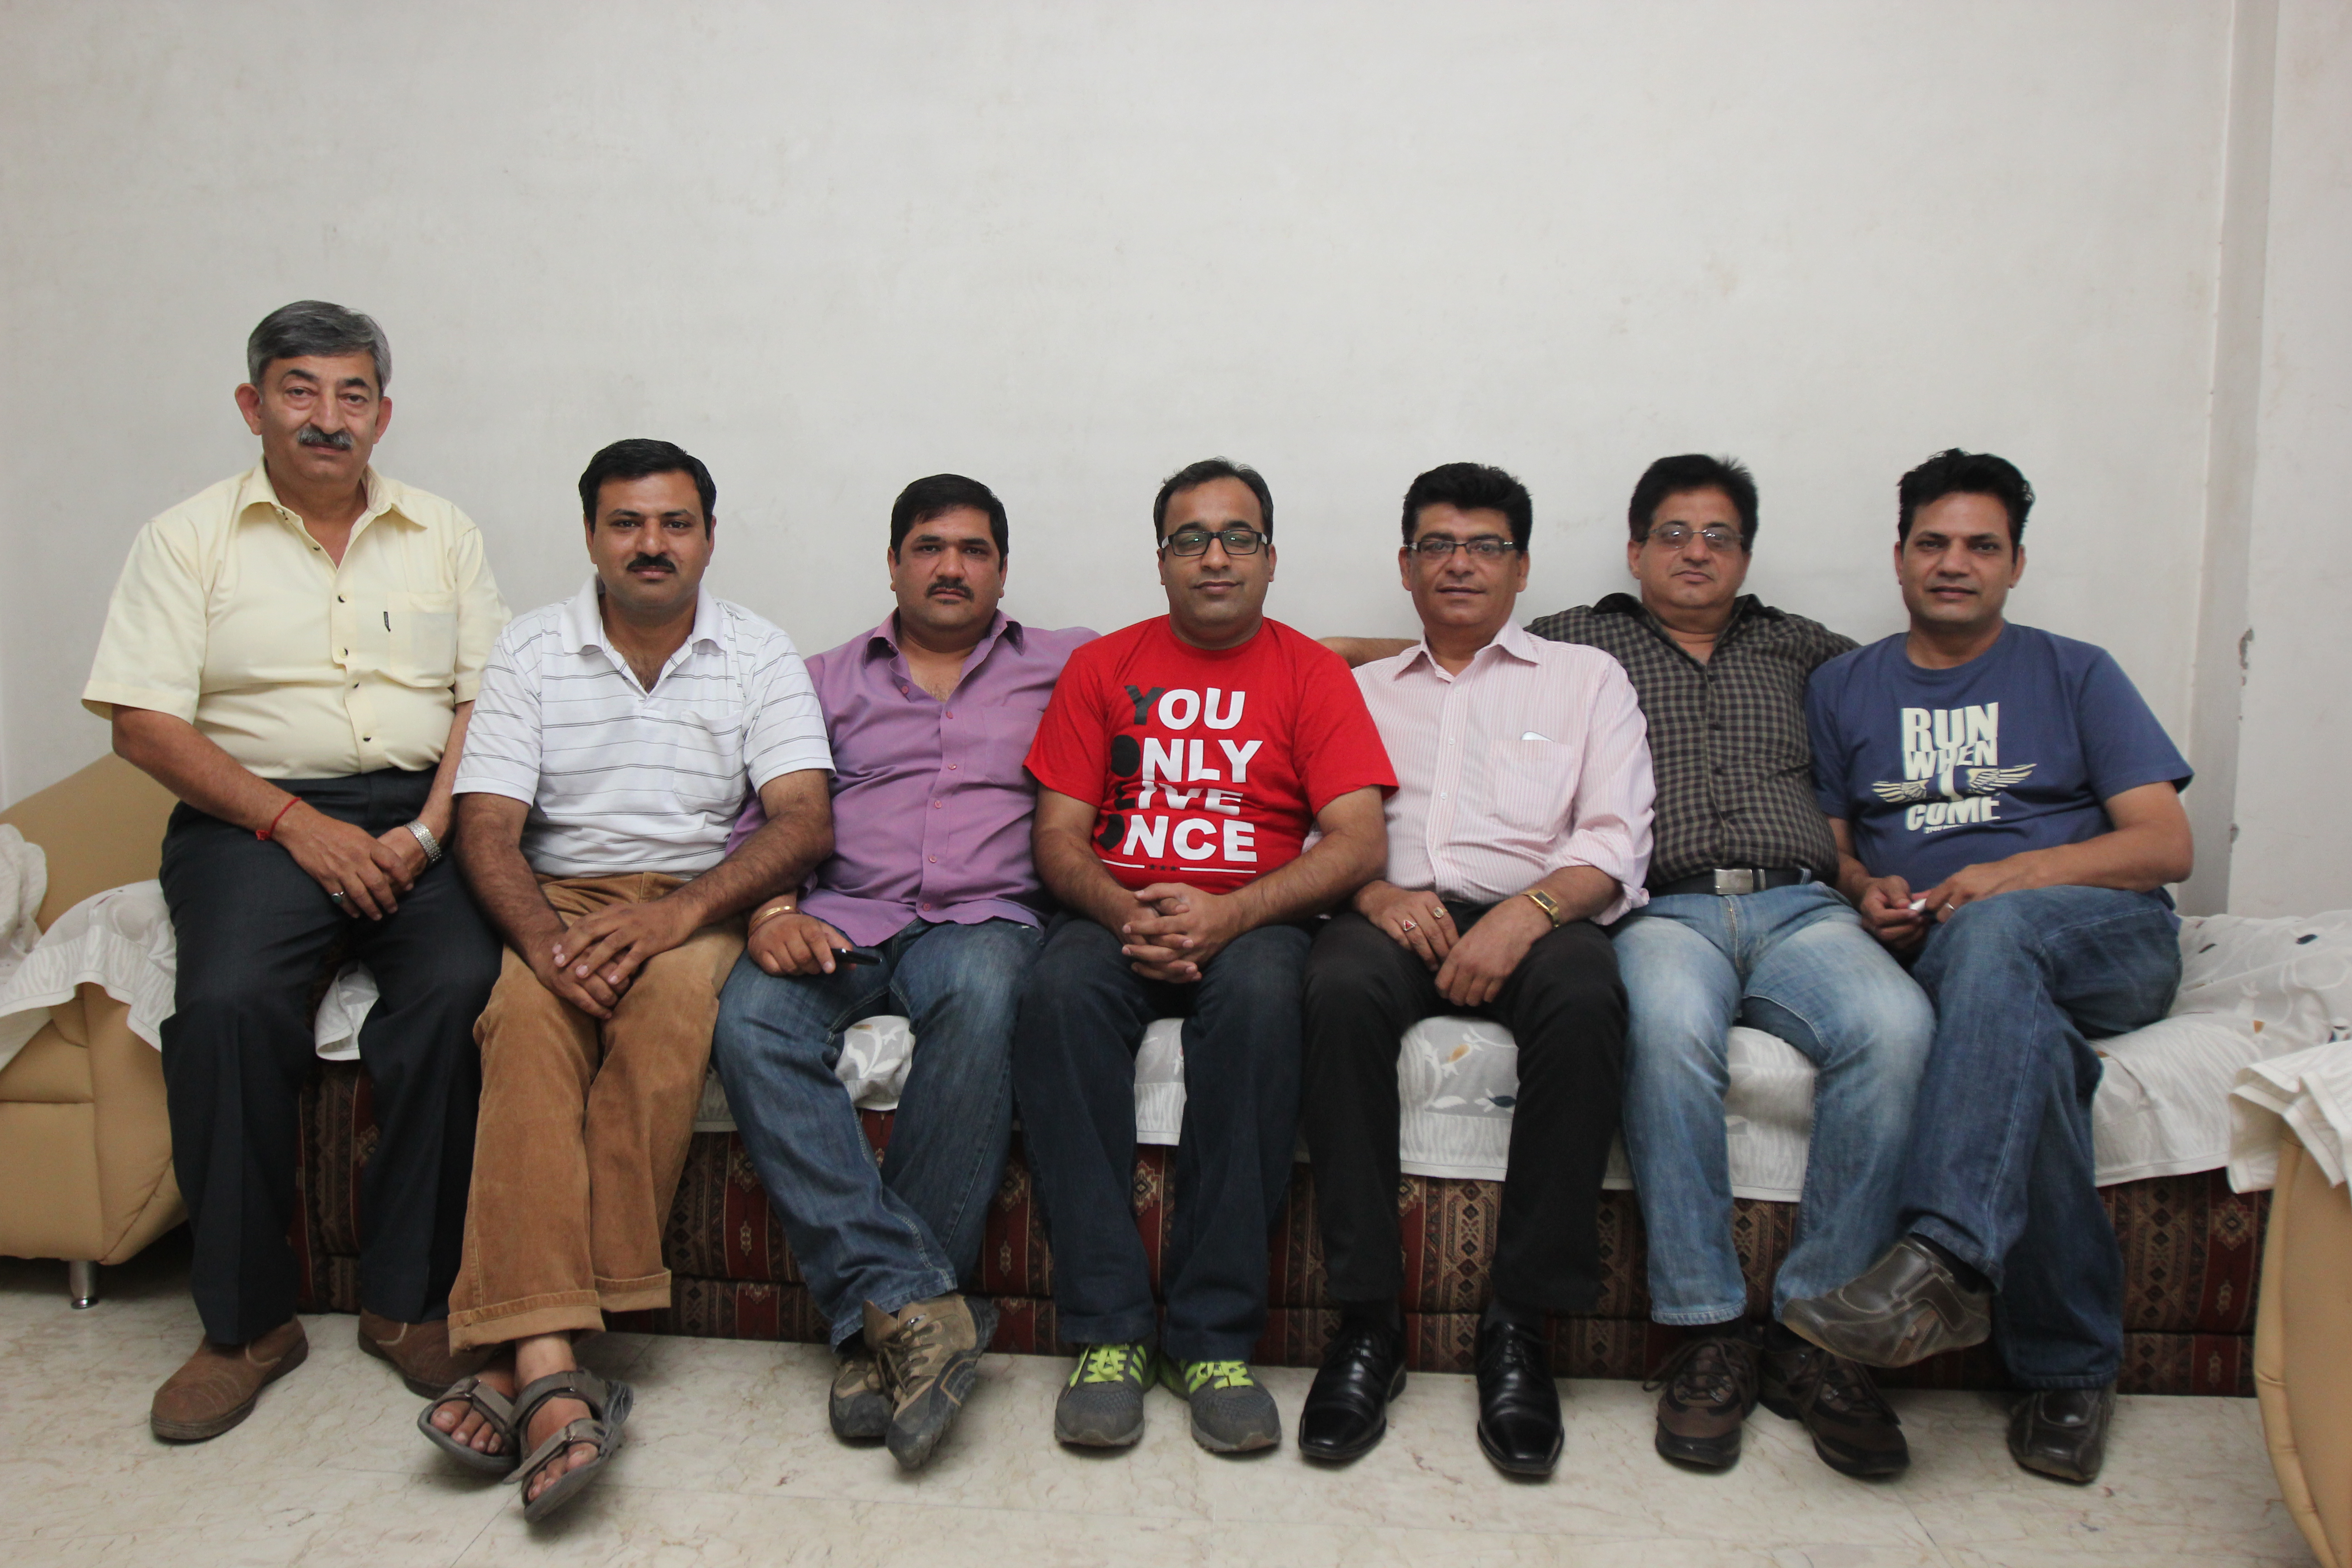 A few good men: The parents who took on Summer Fields School to court over school fees (from left) Vinay Bhalla, Gaurav Bhatia, Veenu Sahdev, Bipin Arora, Rahul Chadha, Ajay Chopra, Rajeev Kumar